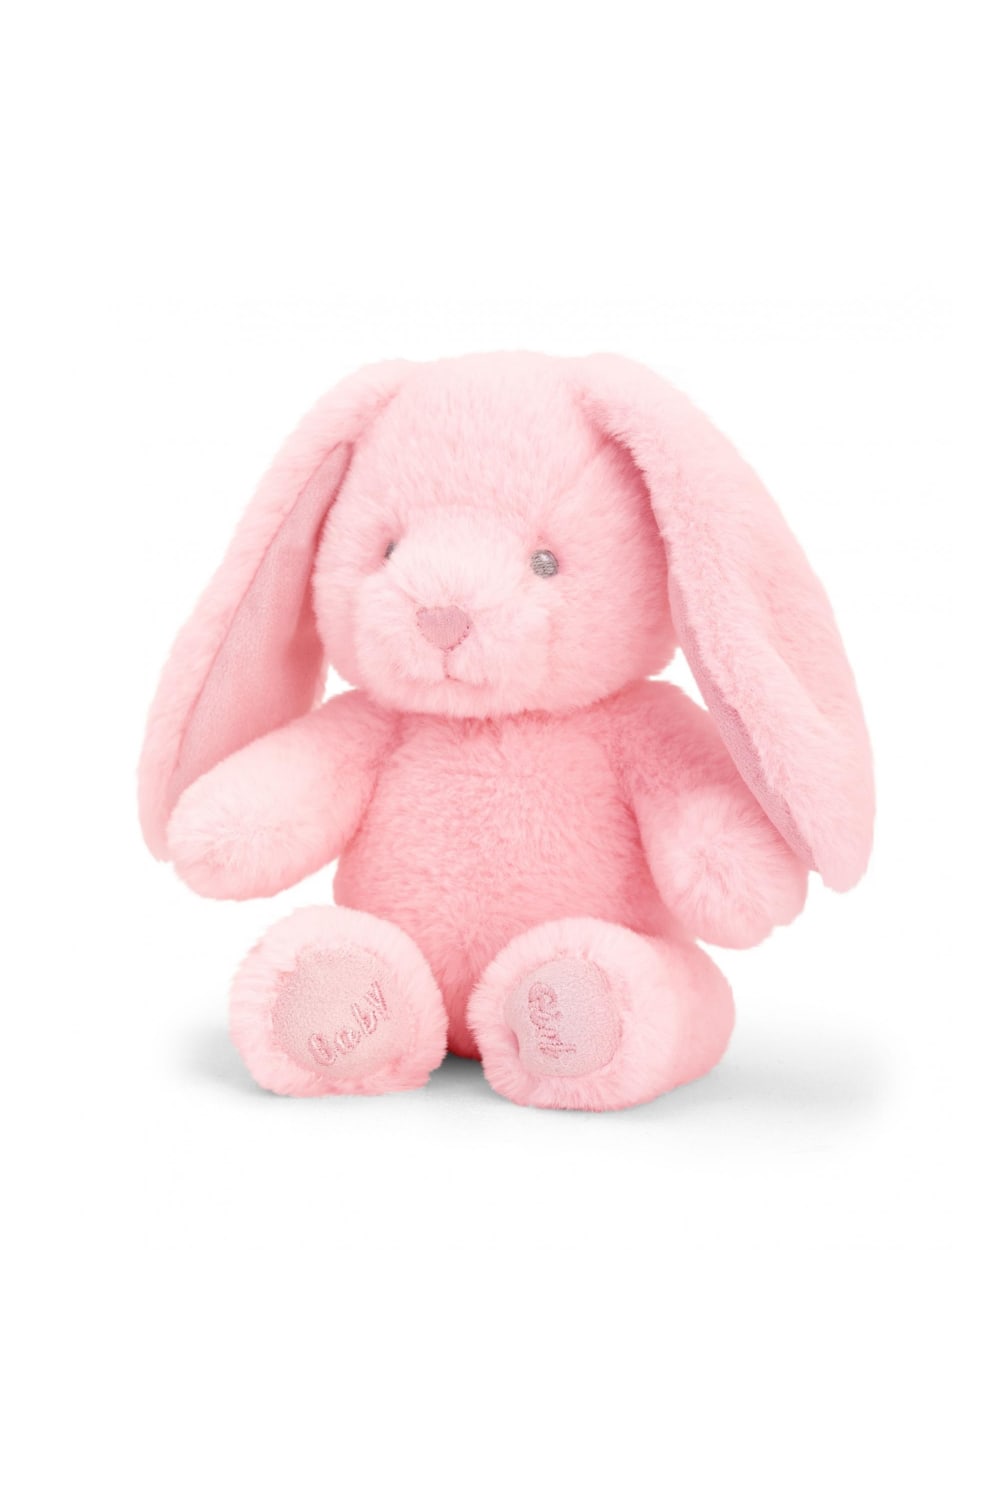 Keel Toys Baby Girls Bunny Plush Toy (Pink) (20cm)